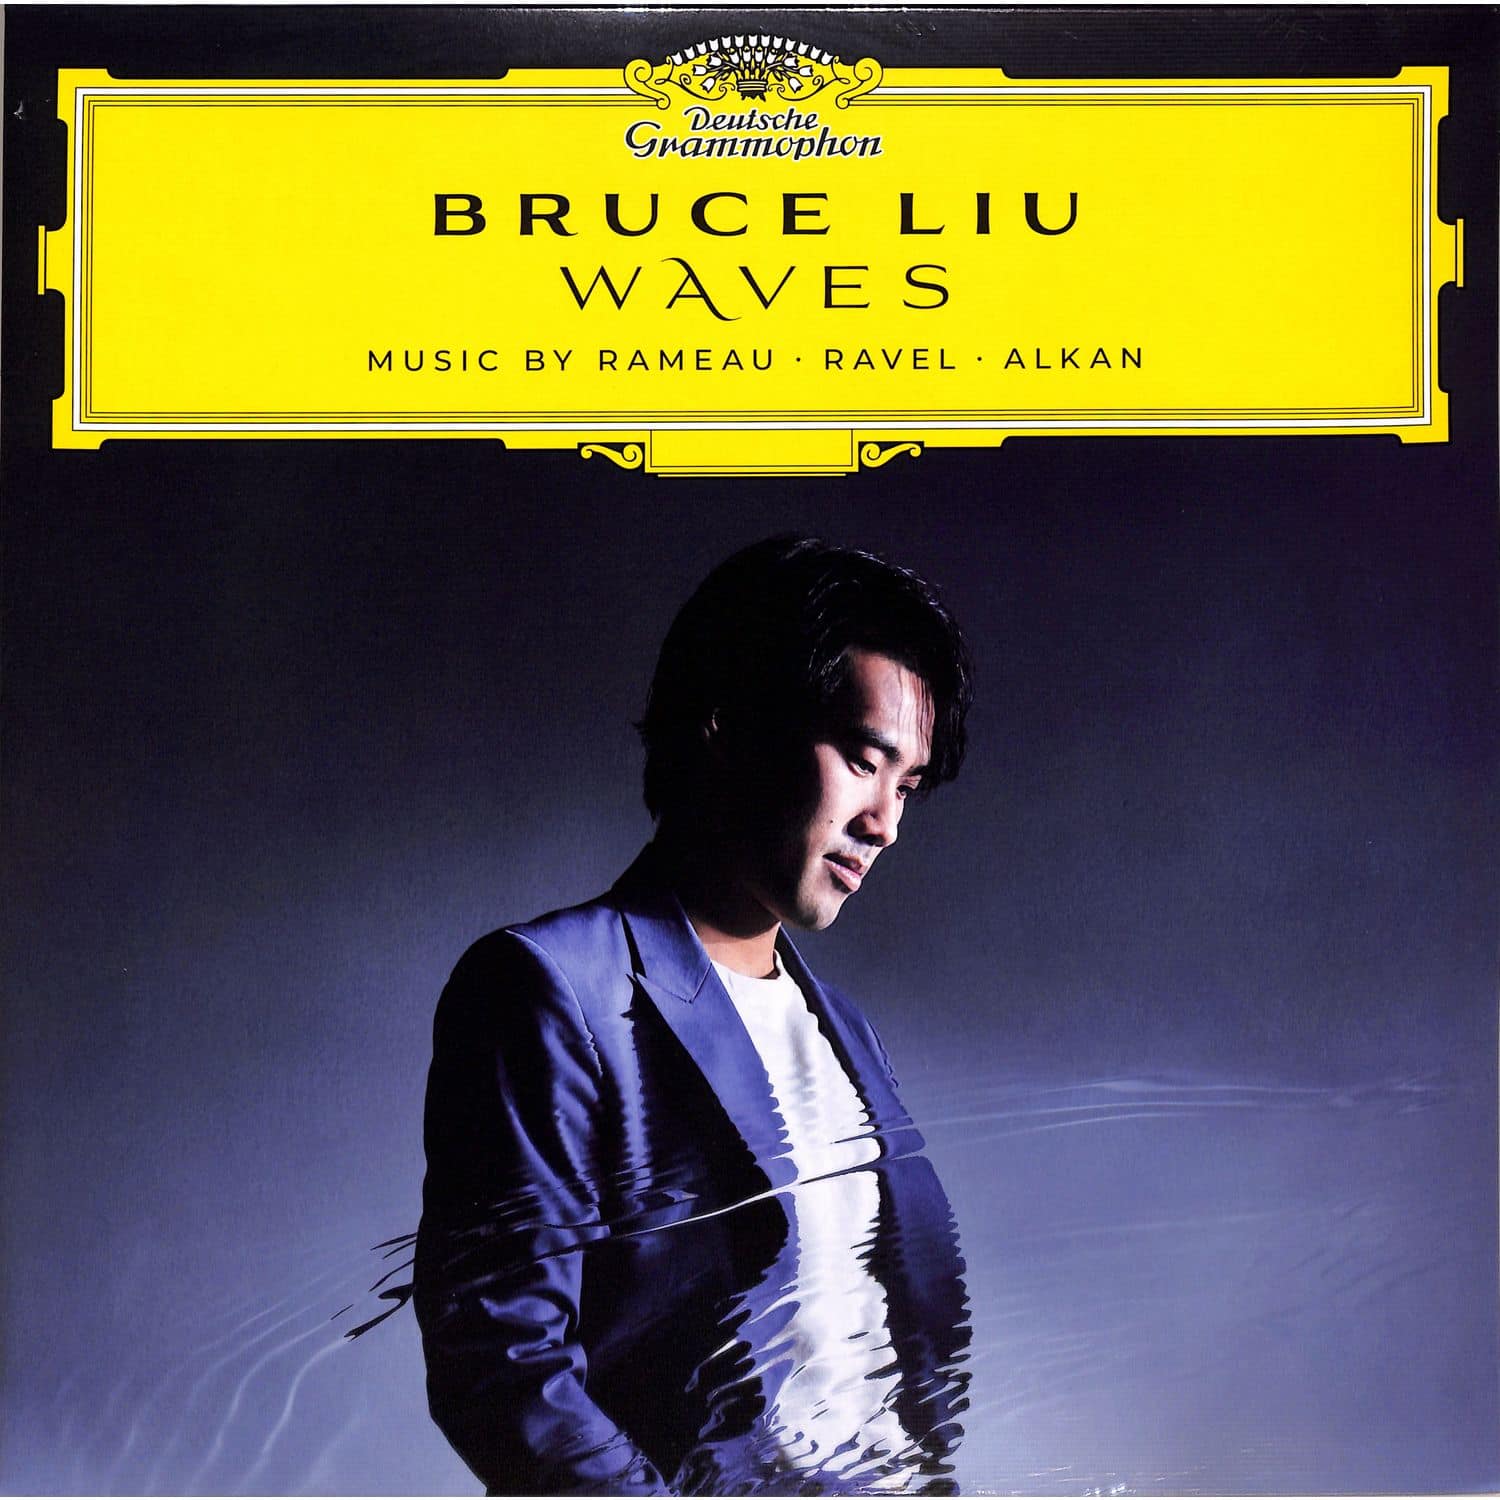 Bruce Liu - WAVES: MUSIC BY RAMEAU, RAVEL, ALKAN 